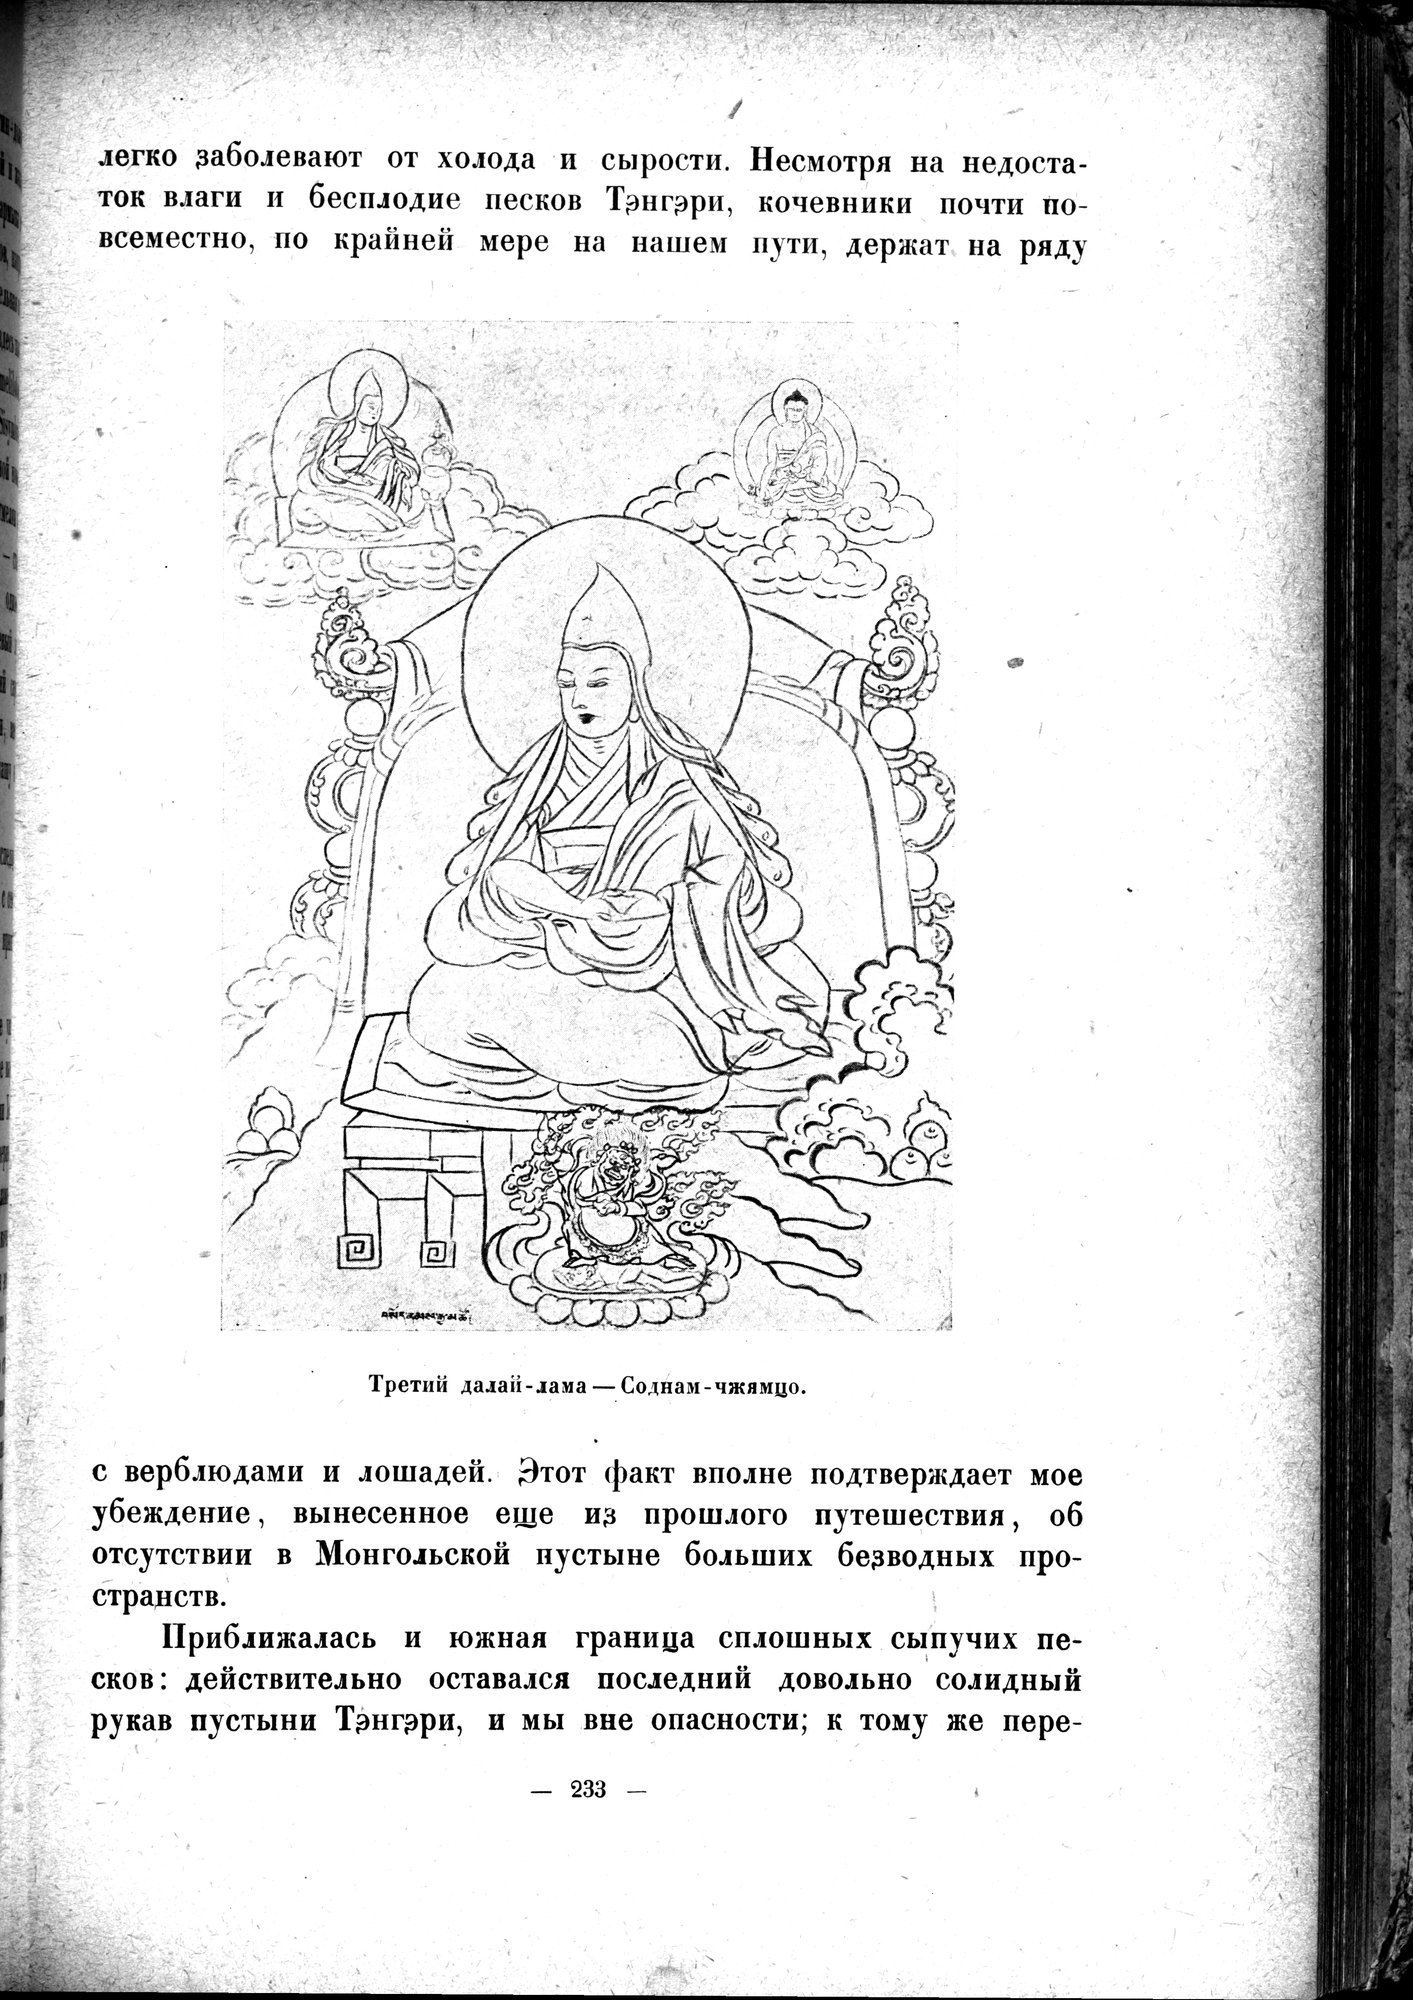 Mongoliya i Amdo i mertby gorod Khara-Khoto : vol.1 / Page 279 (Grayscale High Resolution Image)